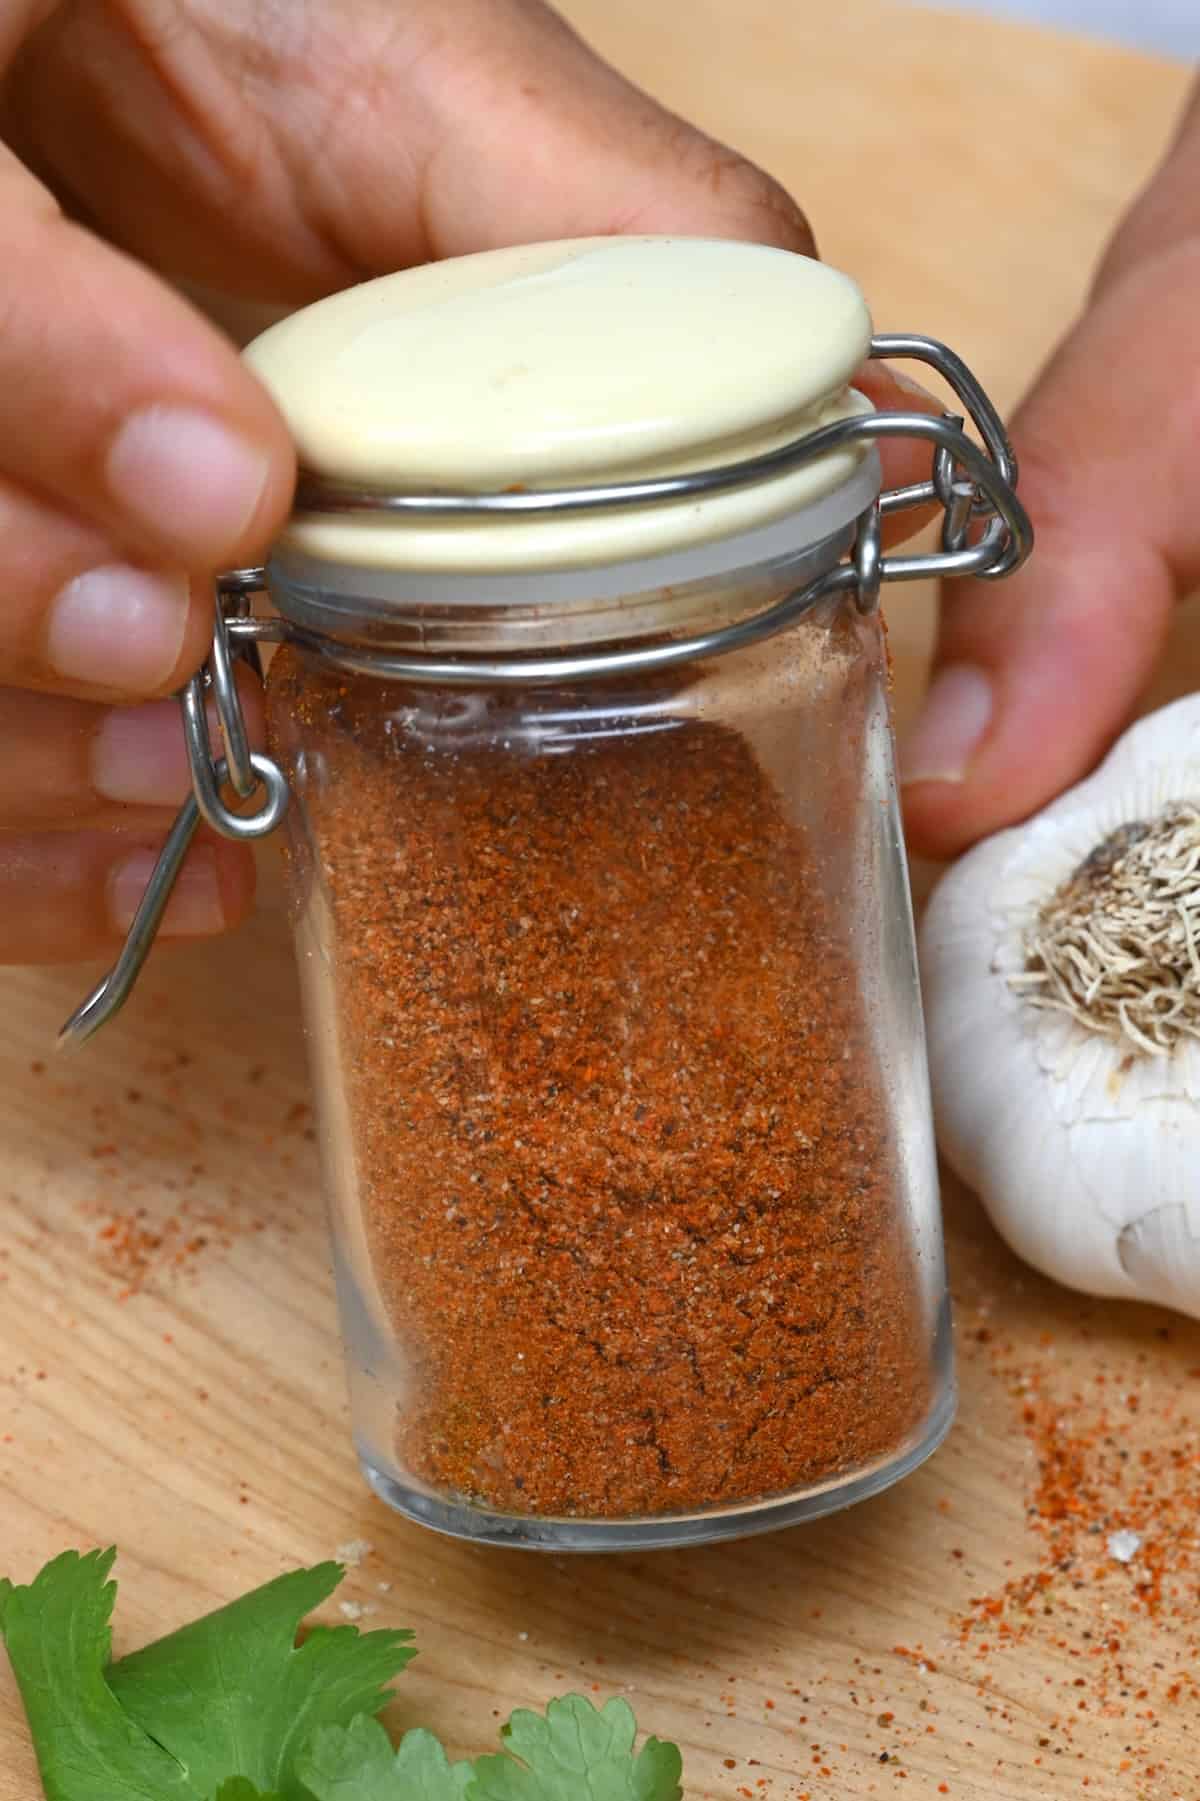 A small jar with chili seasoning